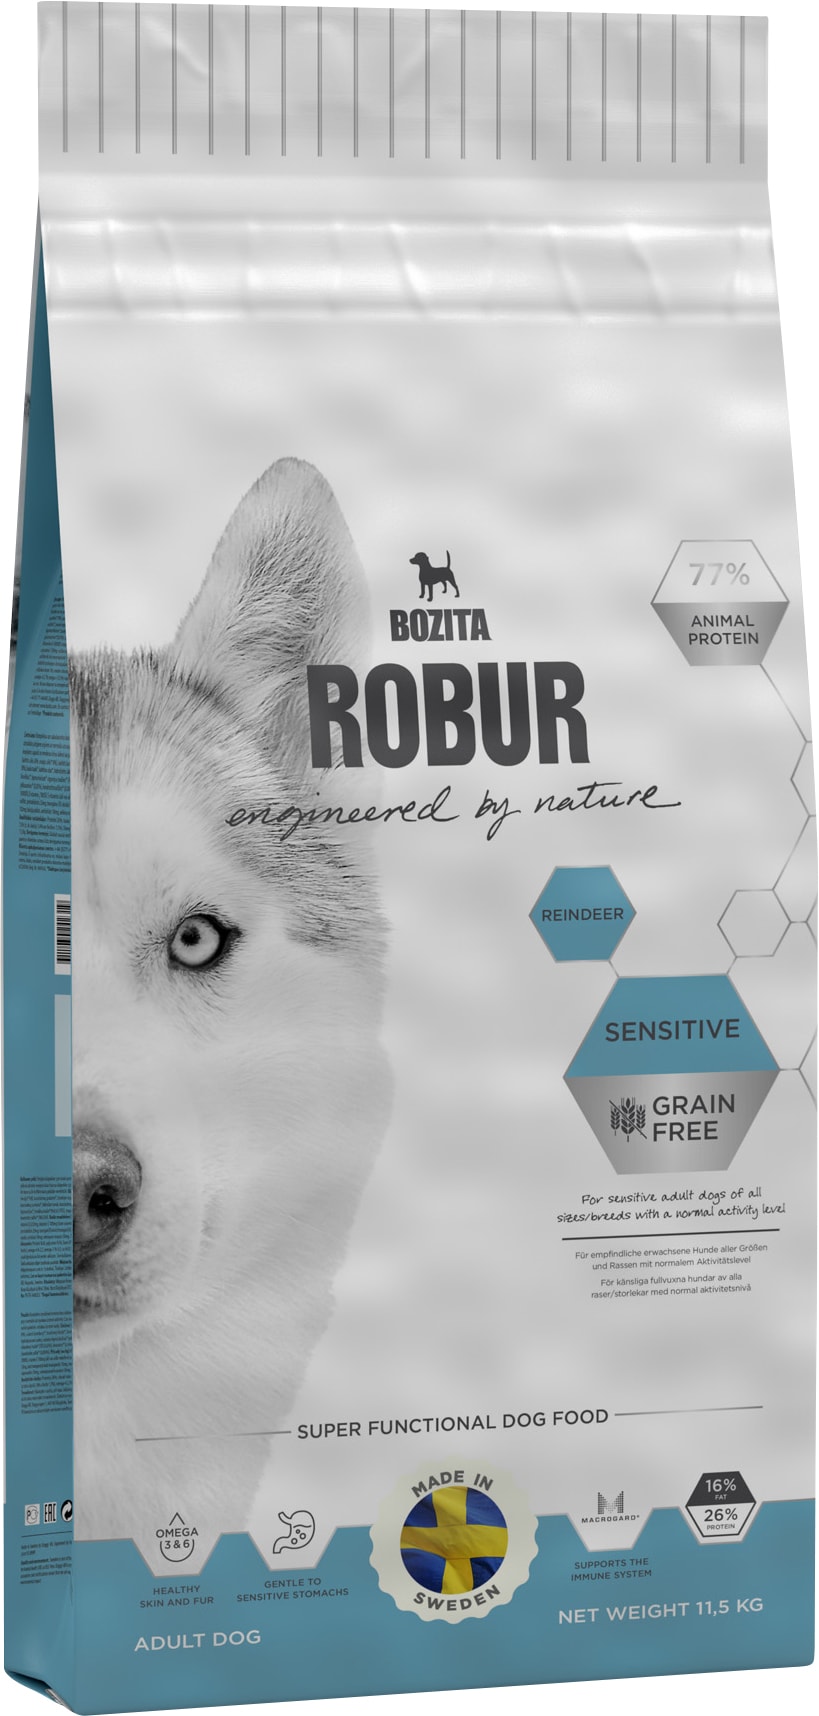 Bozita Robur Sensitive Grain Free Reindeer Hundfoder